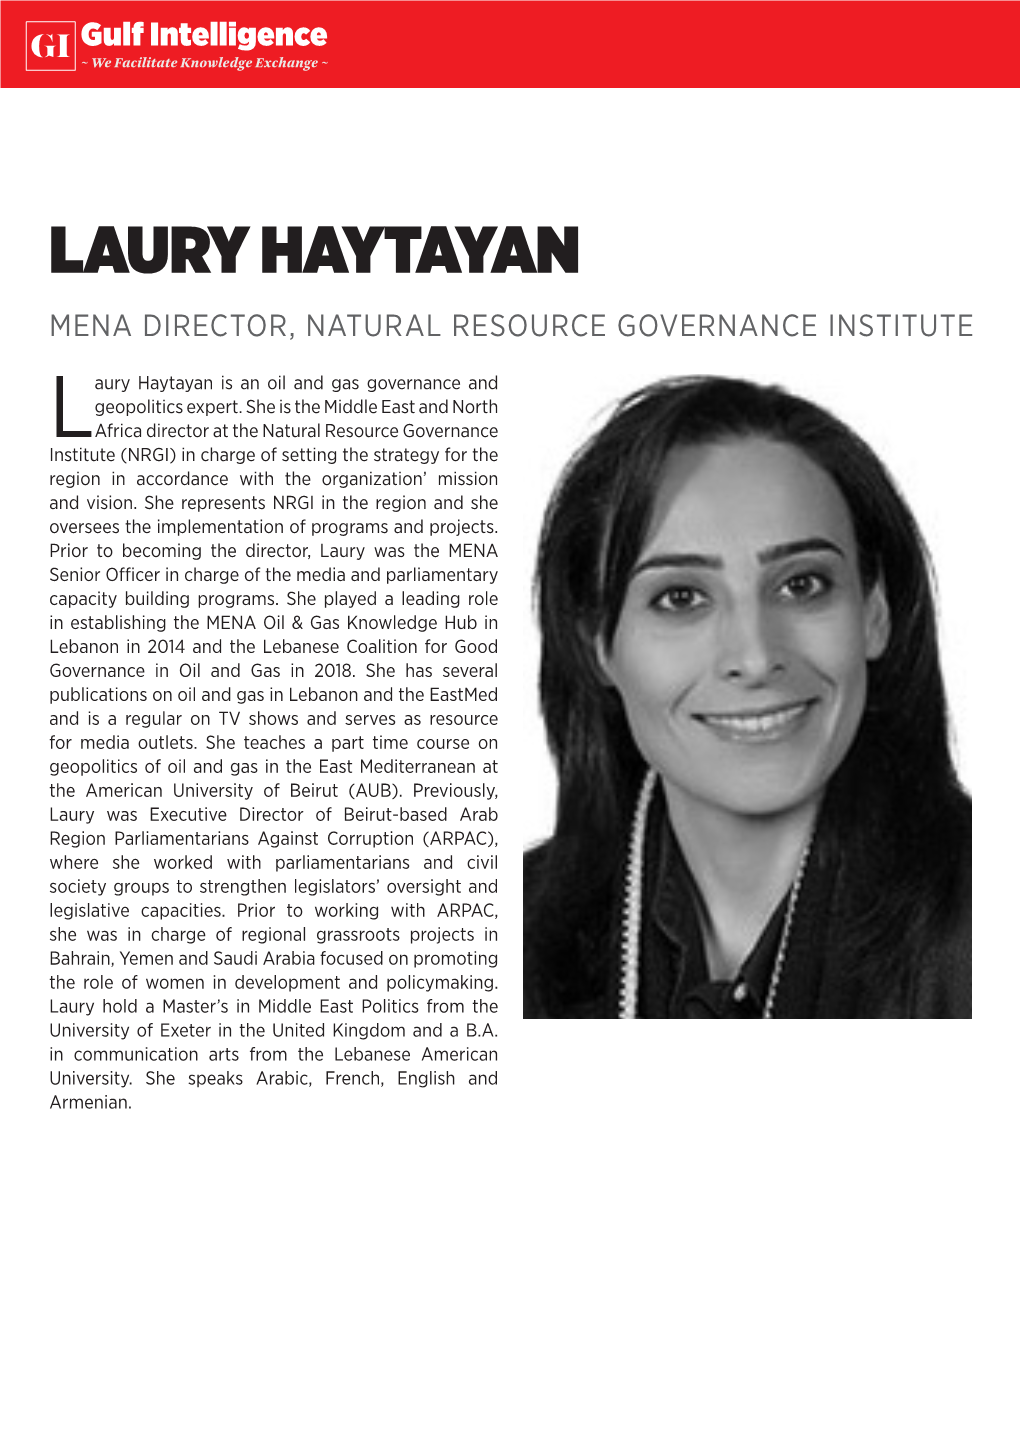 Laury Haytayan Mena Director, Natural Resource Governance Institute